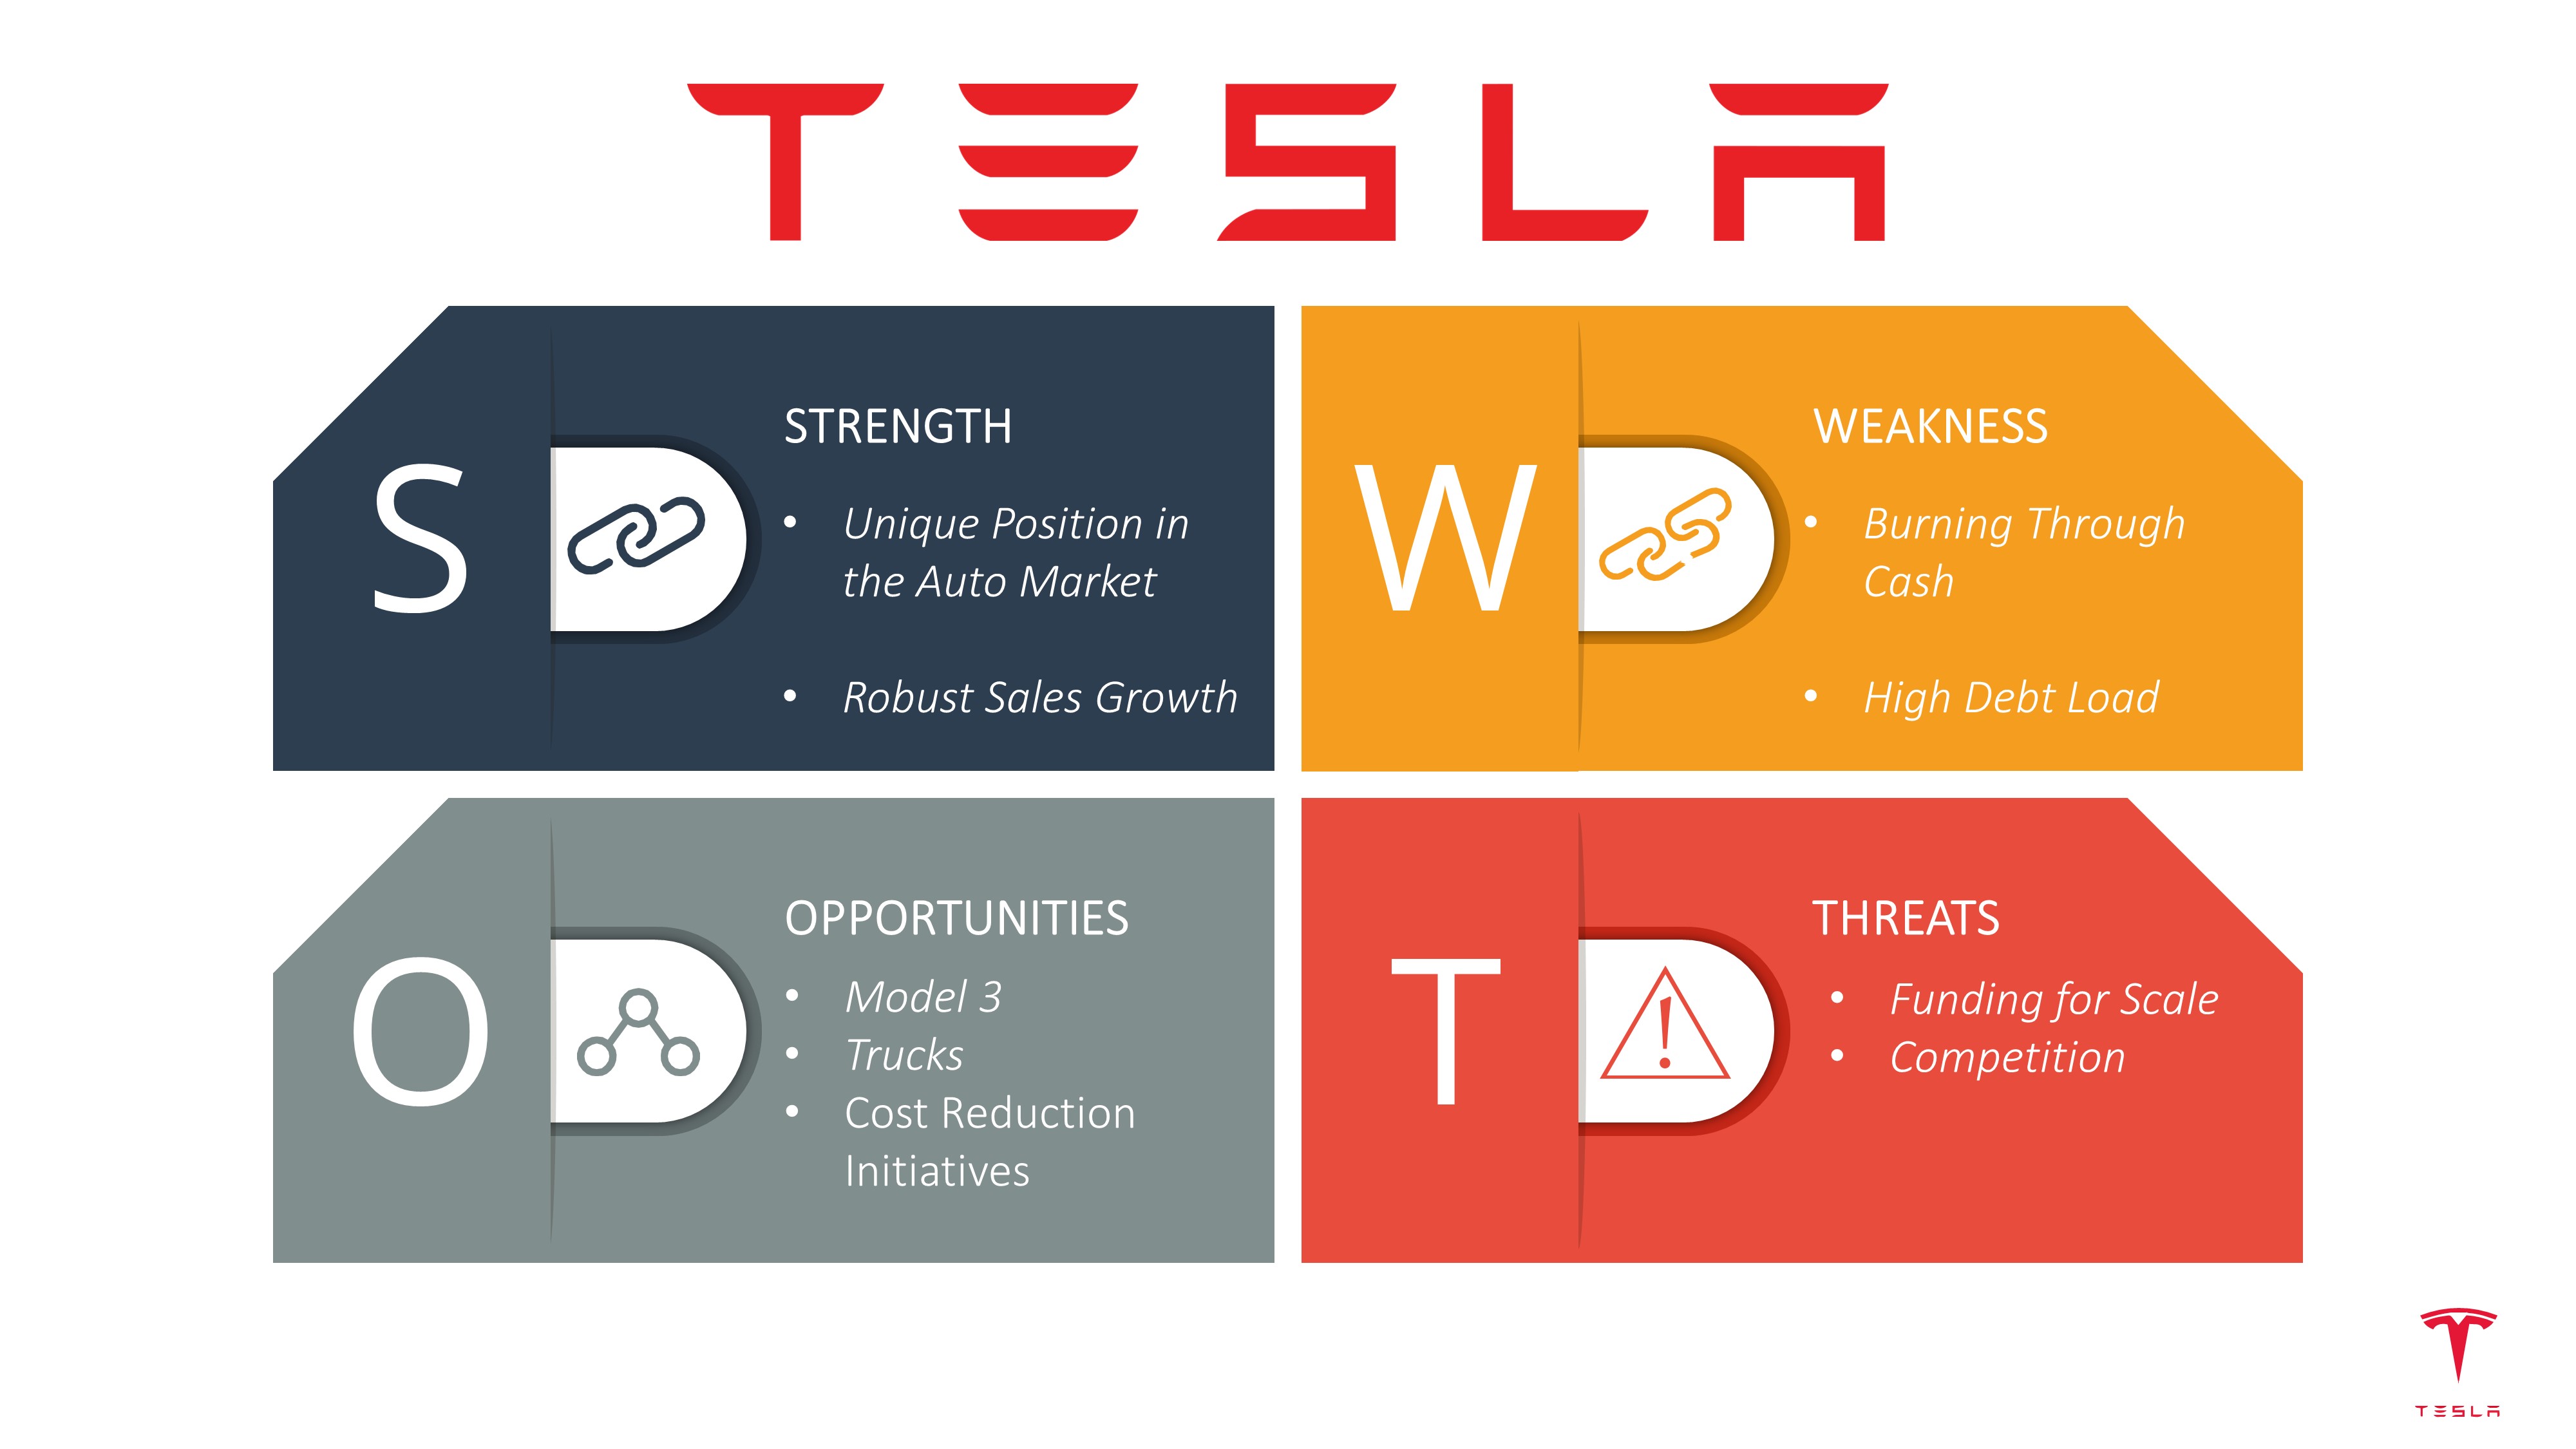 SWOT Analysis Presentation for Tesla Car Company